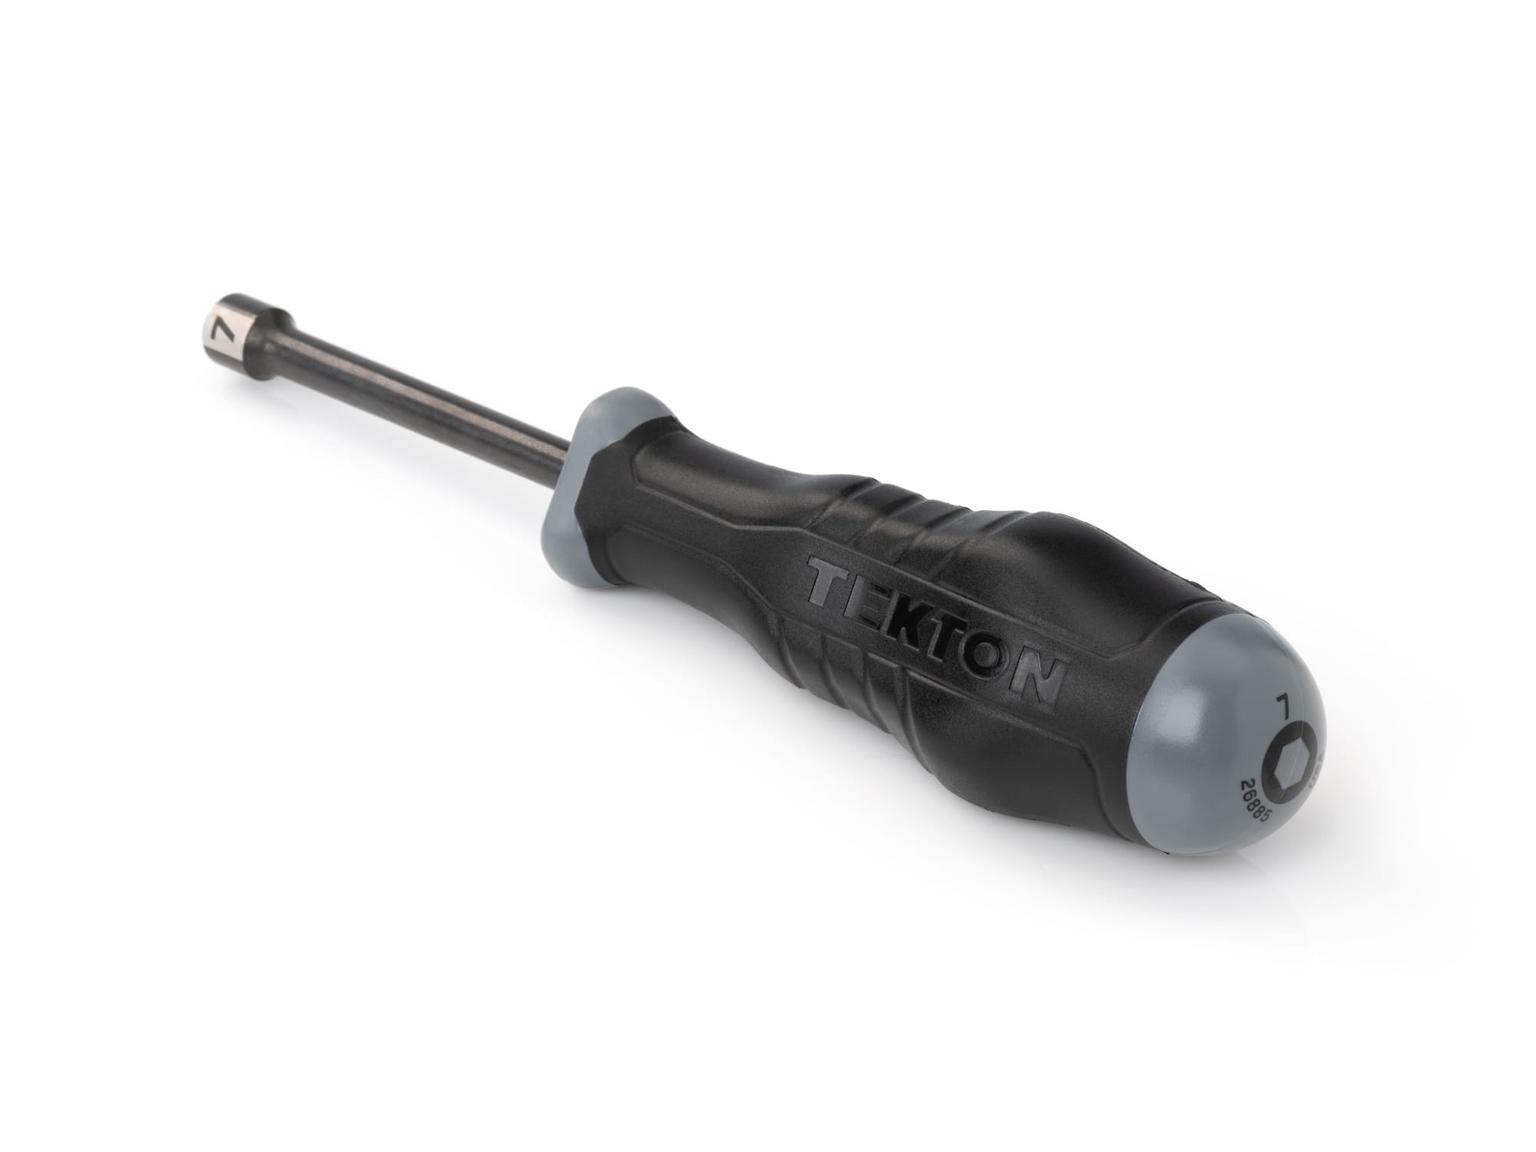 TEKTON 26885-T 7 mm High-Torque Black Oxide Blade Nut Driver